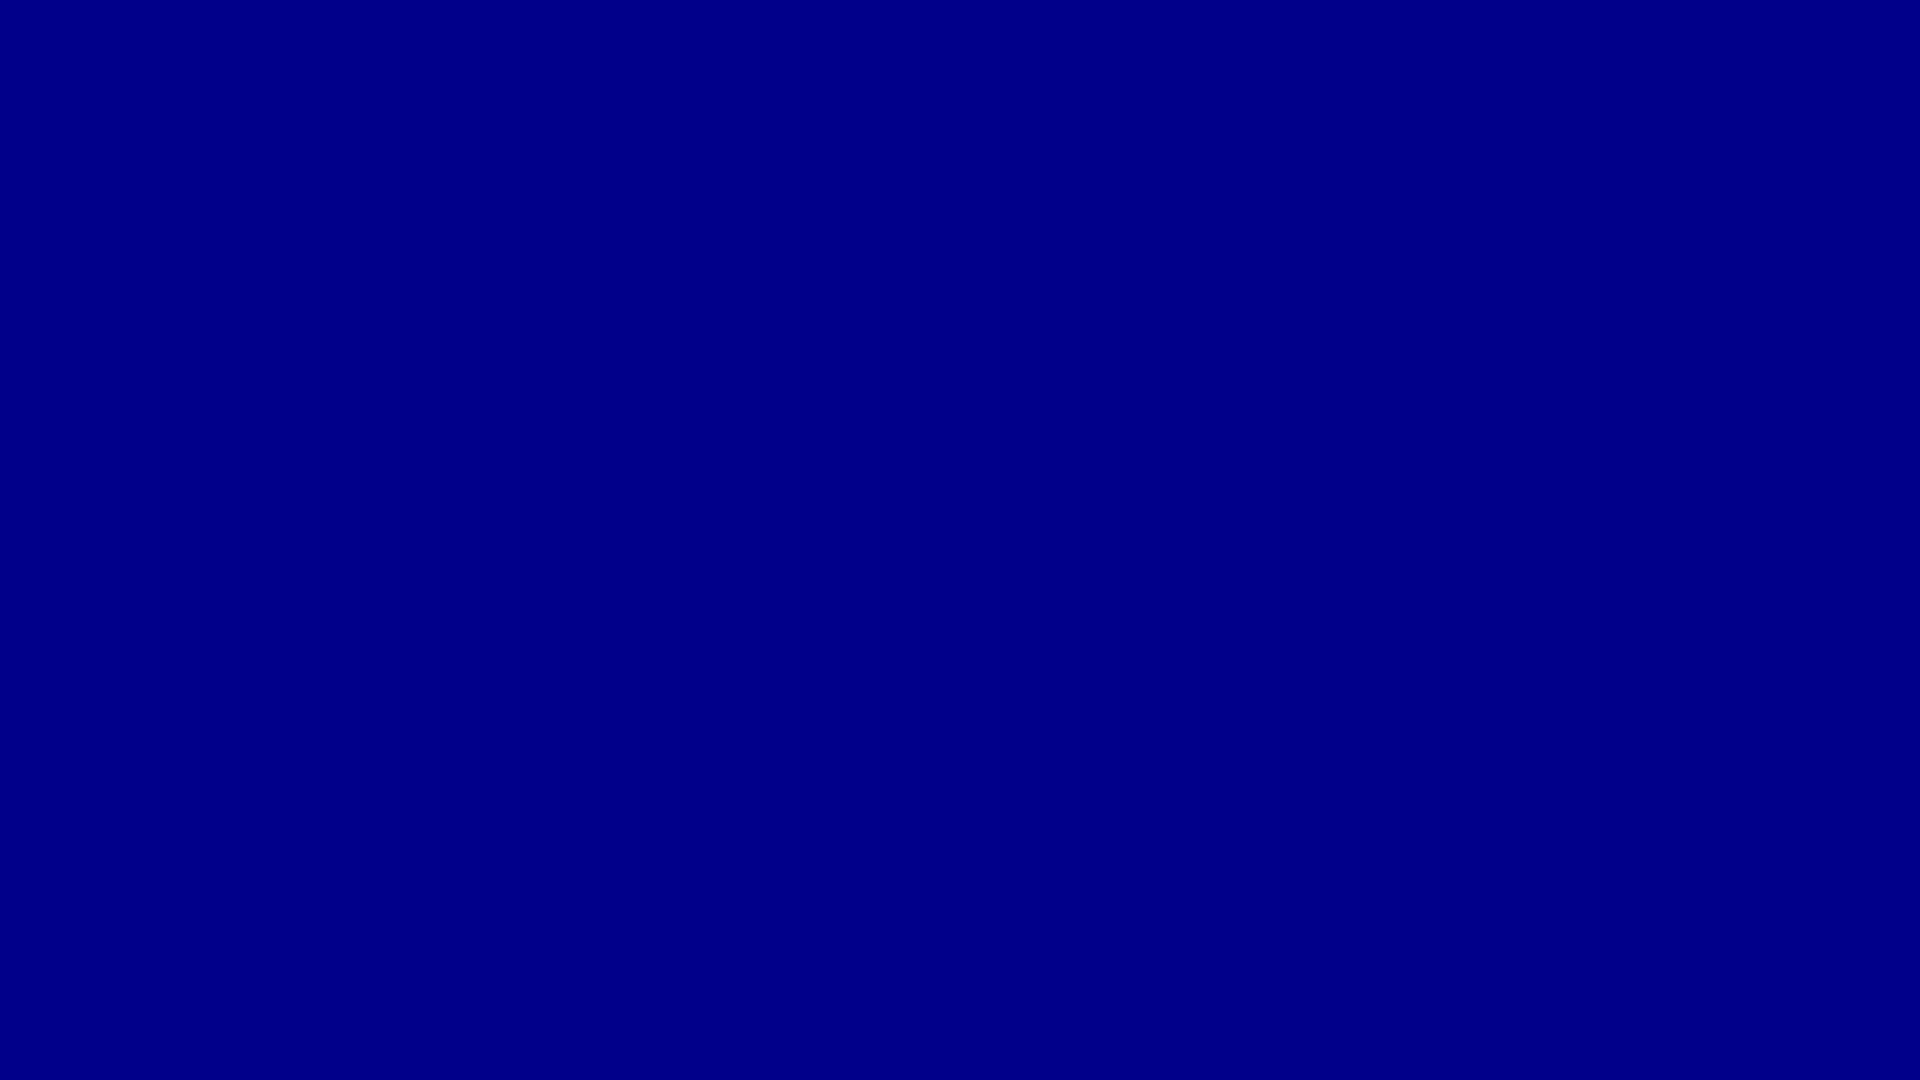 1920x1080-dark-blue-solid-color-background.jpg